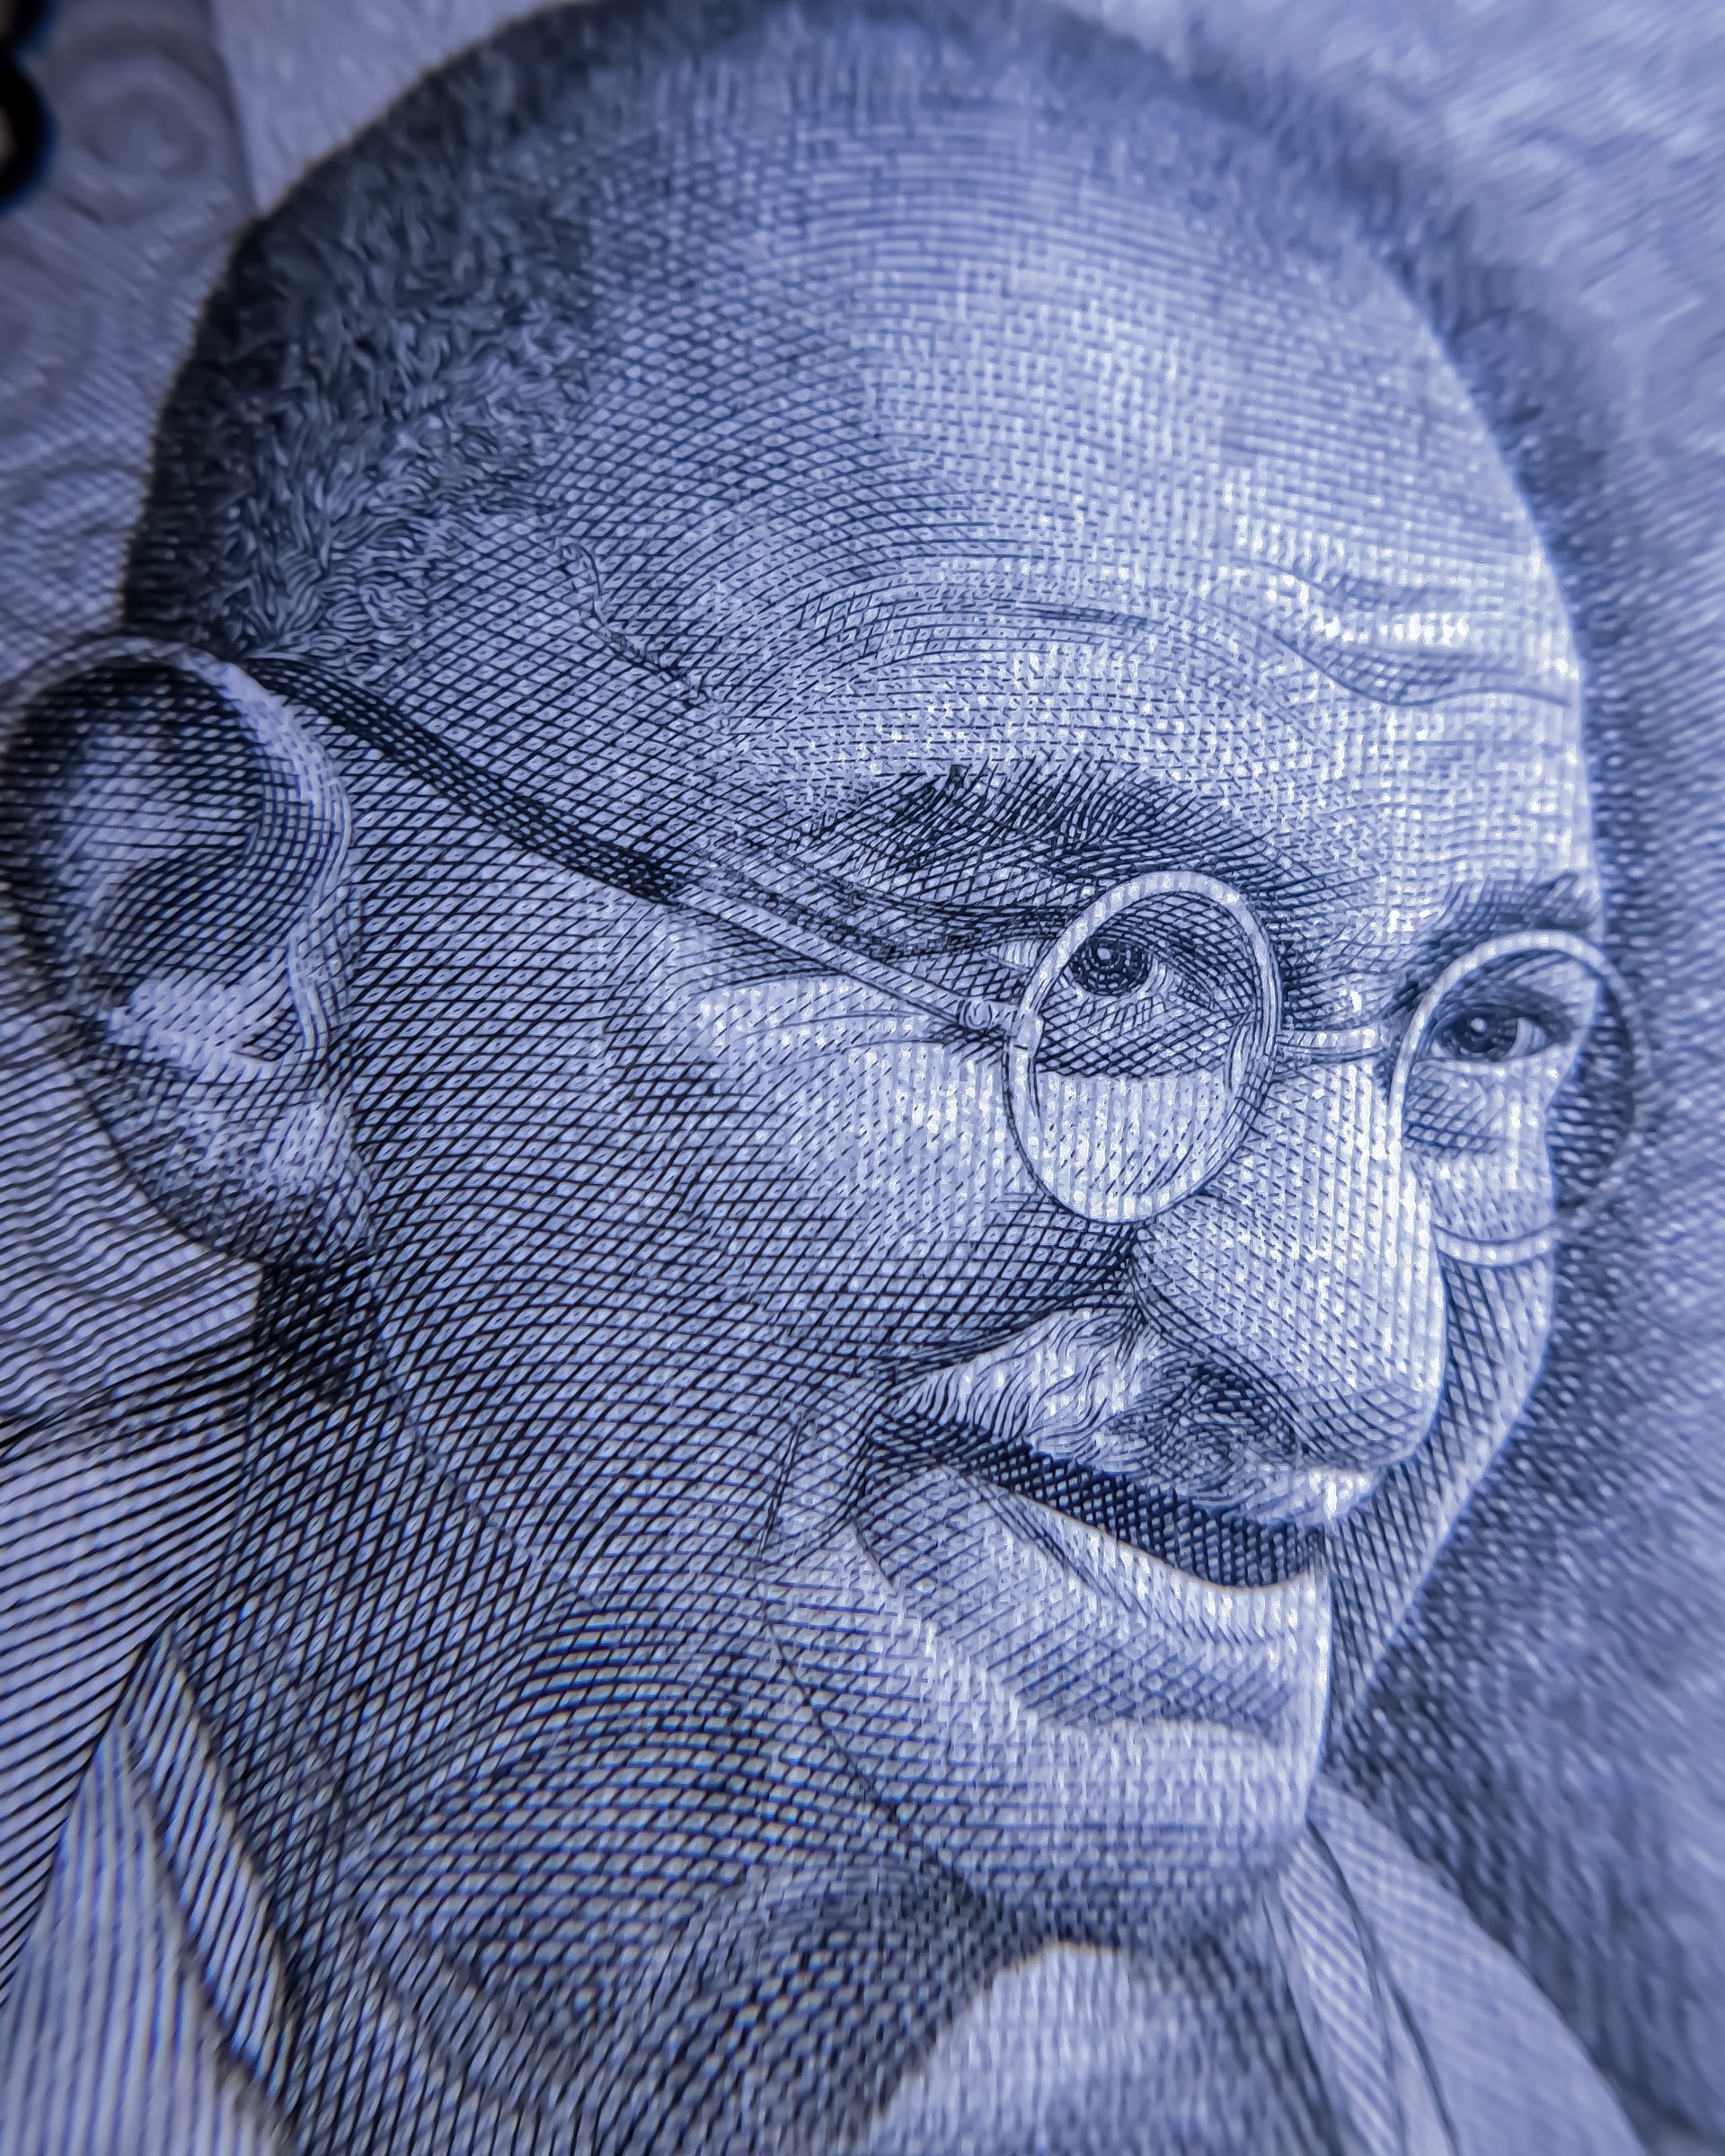 Gandhi-Purple-Portrait